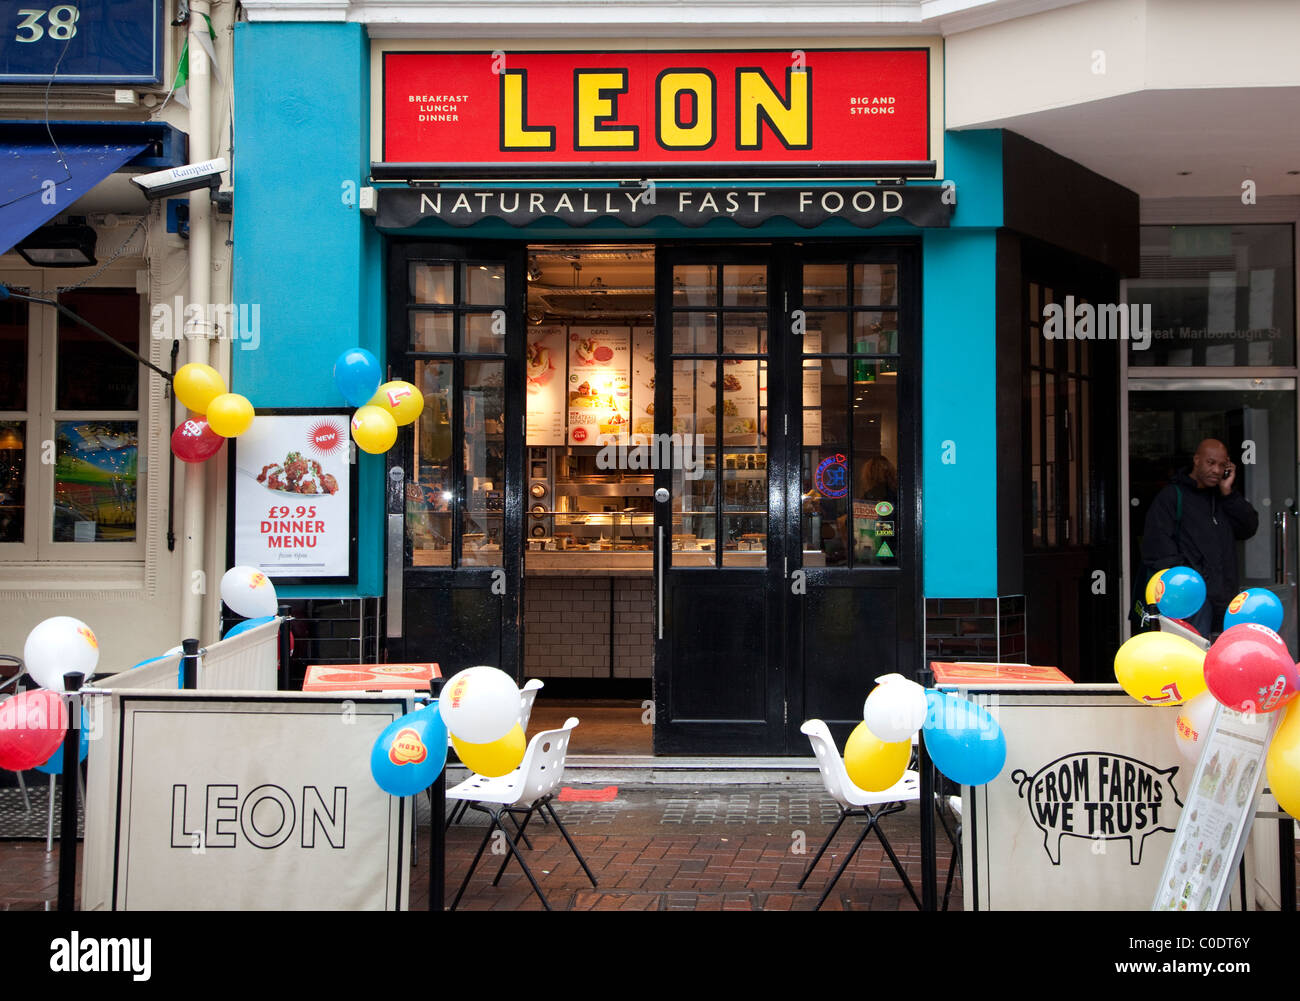 Branch of Leon restaurants in London Stock Photo